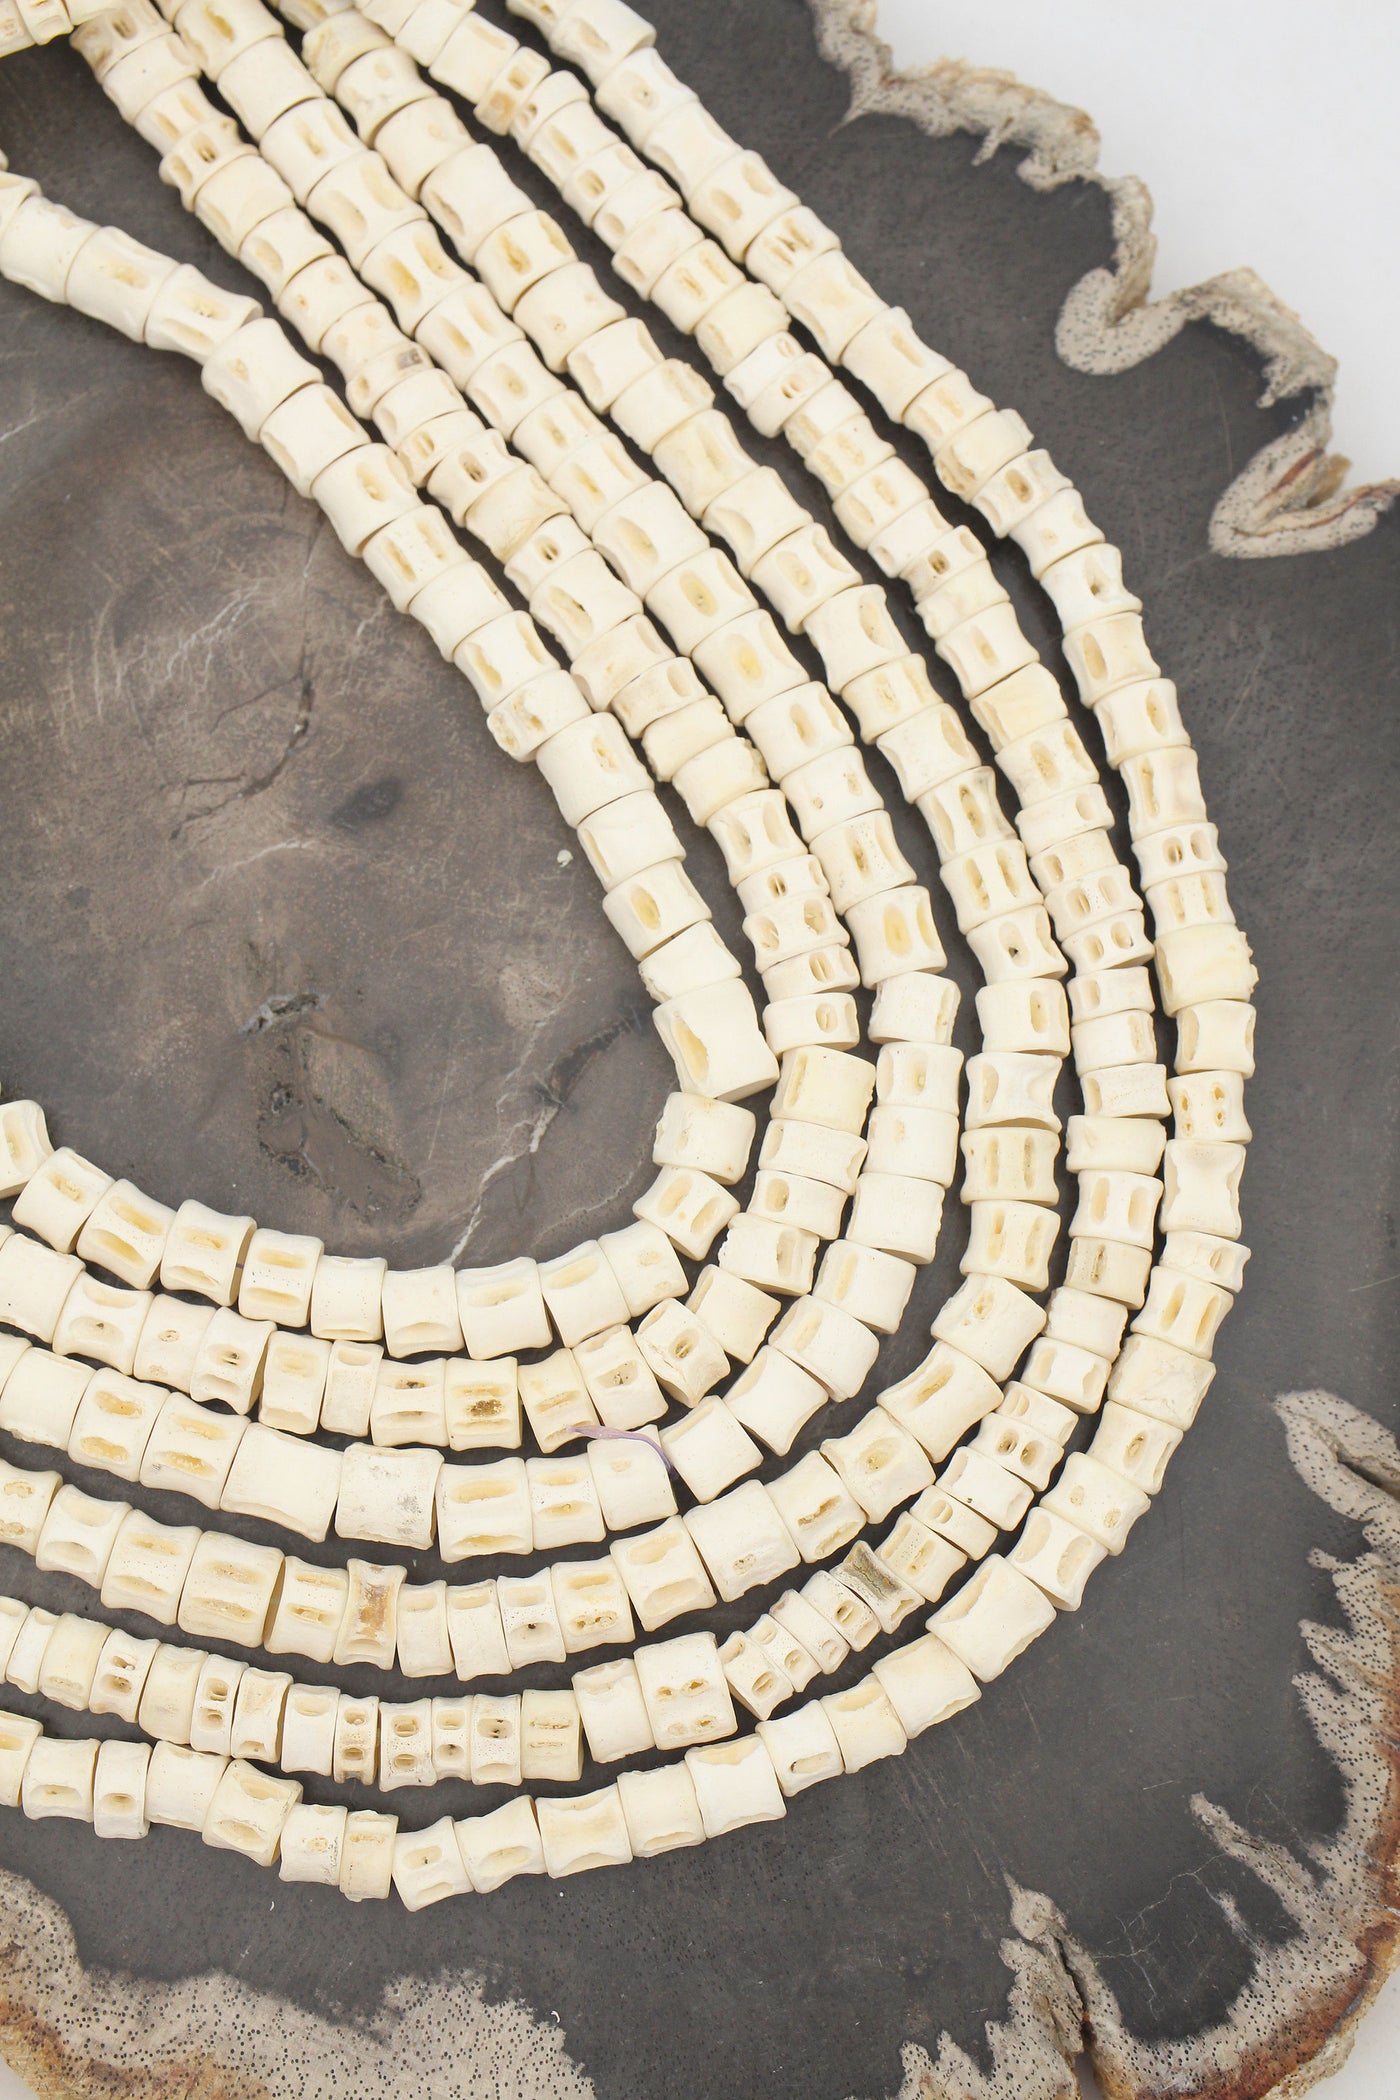 Medium Fish Vertebrae Bone Beads from Africa, 8mm, 42" Long Strand, 250+ pieces